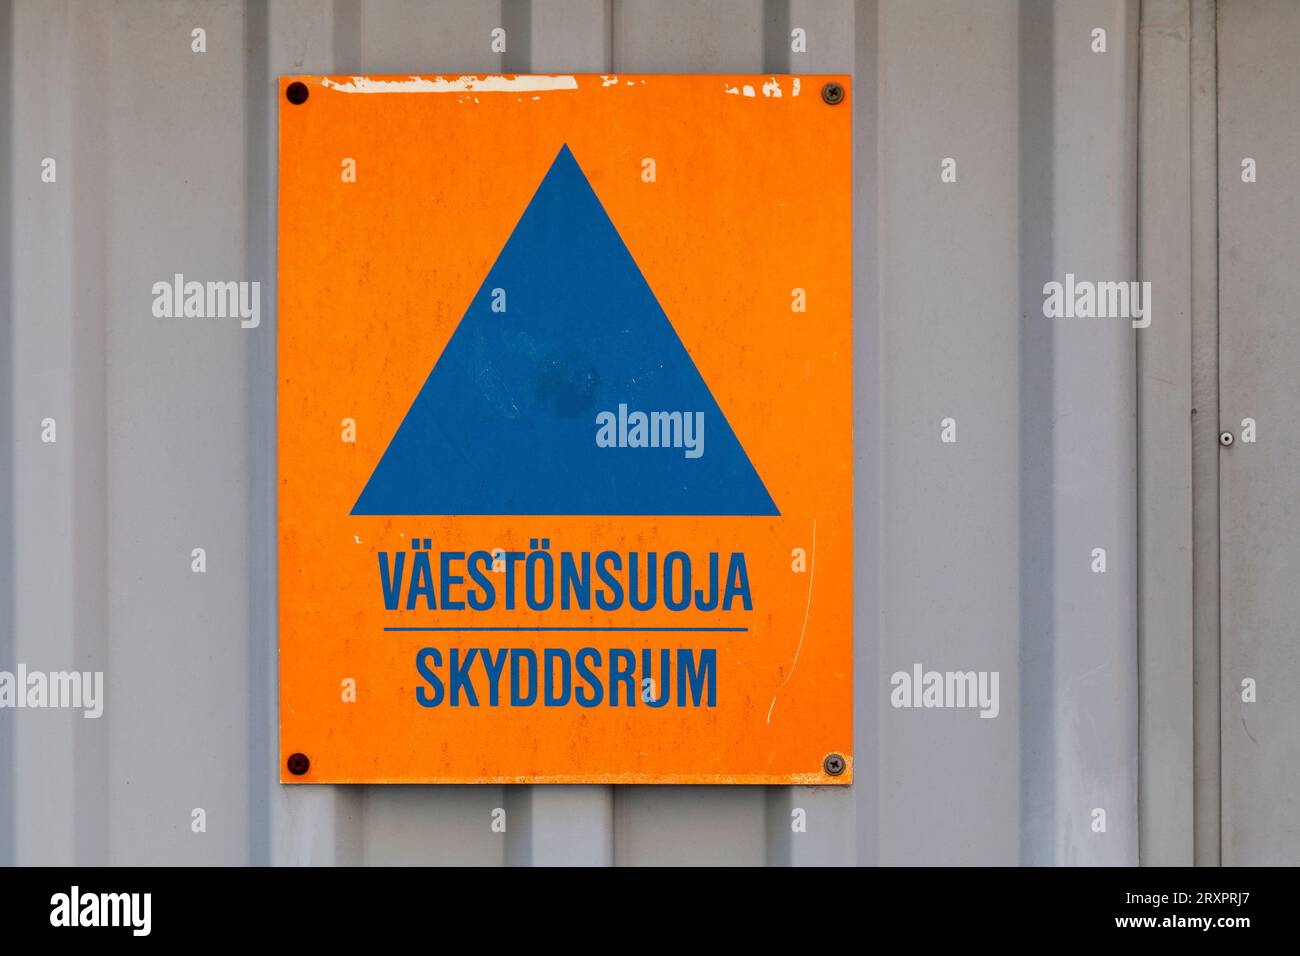 Blue triangle drawn on an orange placard with written in Finnish 'Väestönsuoja skyddsrum', meaning in English 'Air-raid shelter'. Stock Photo